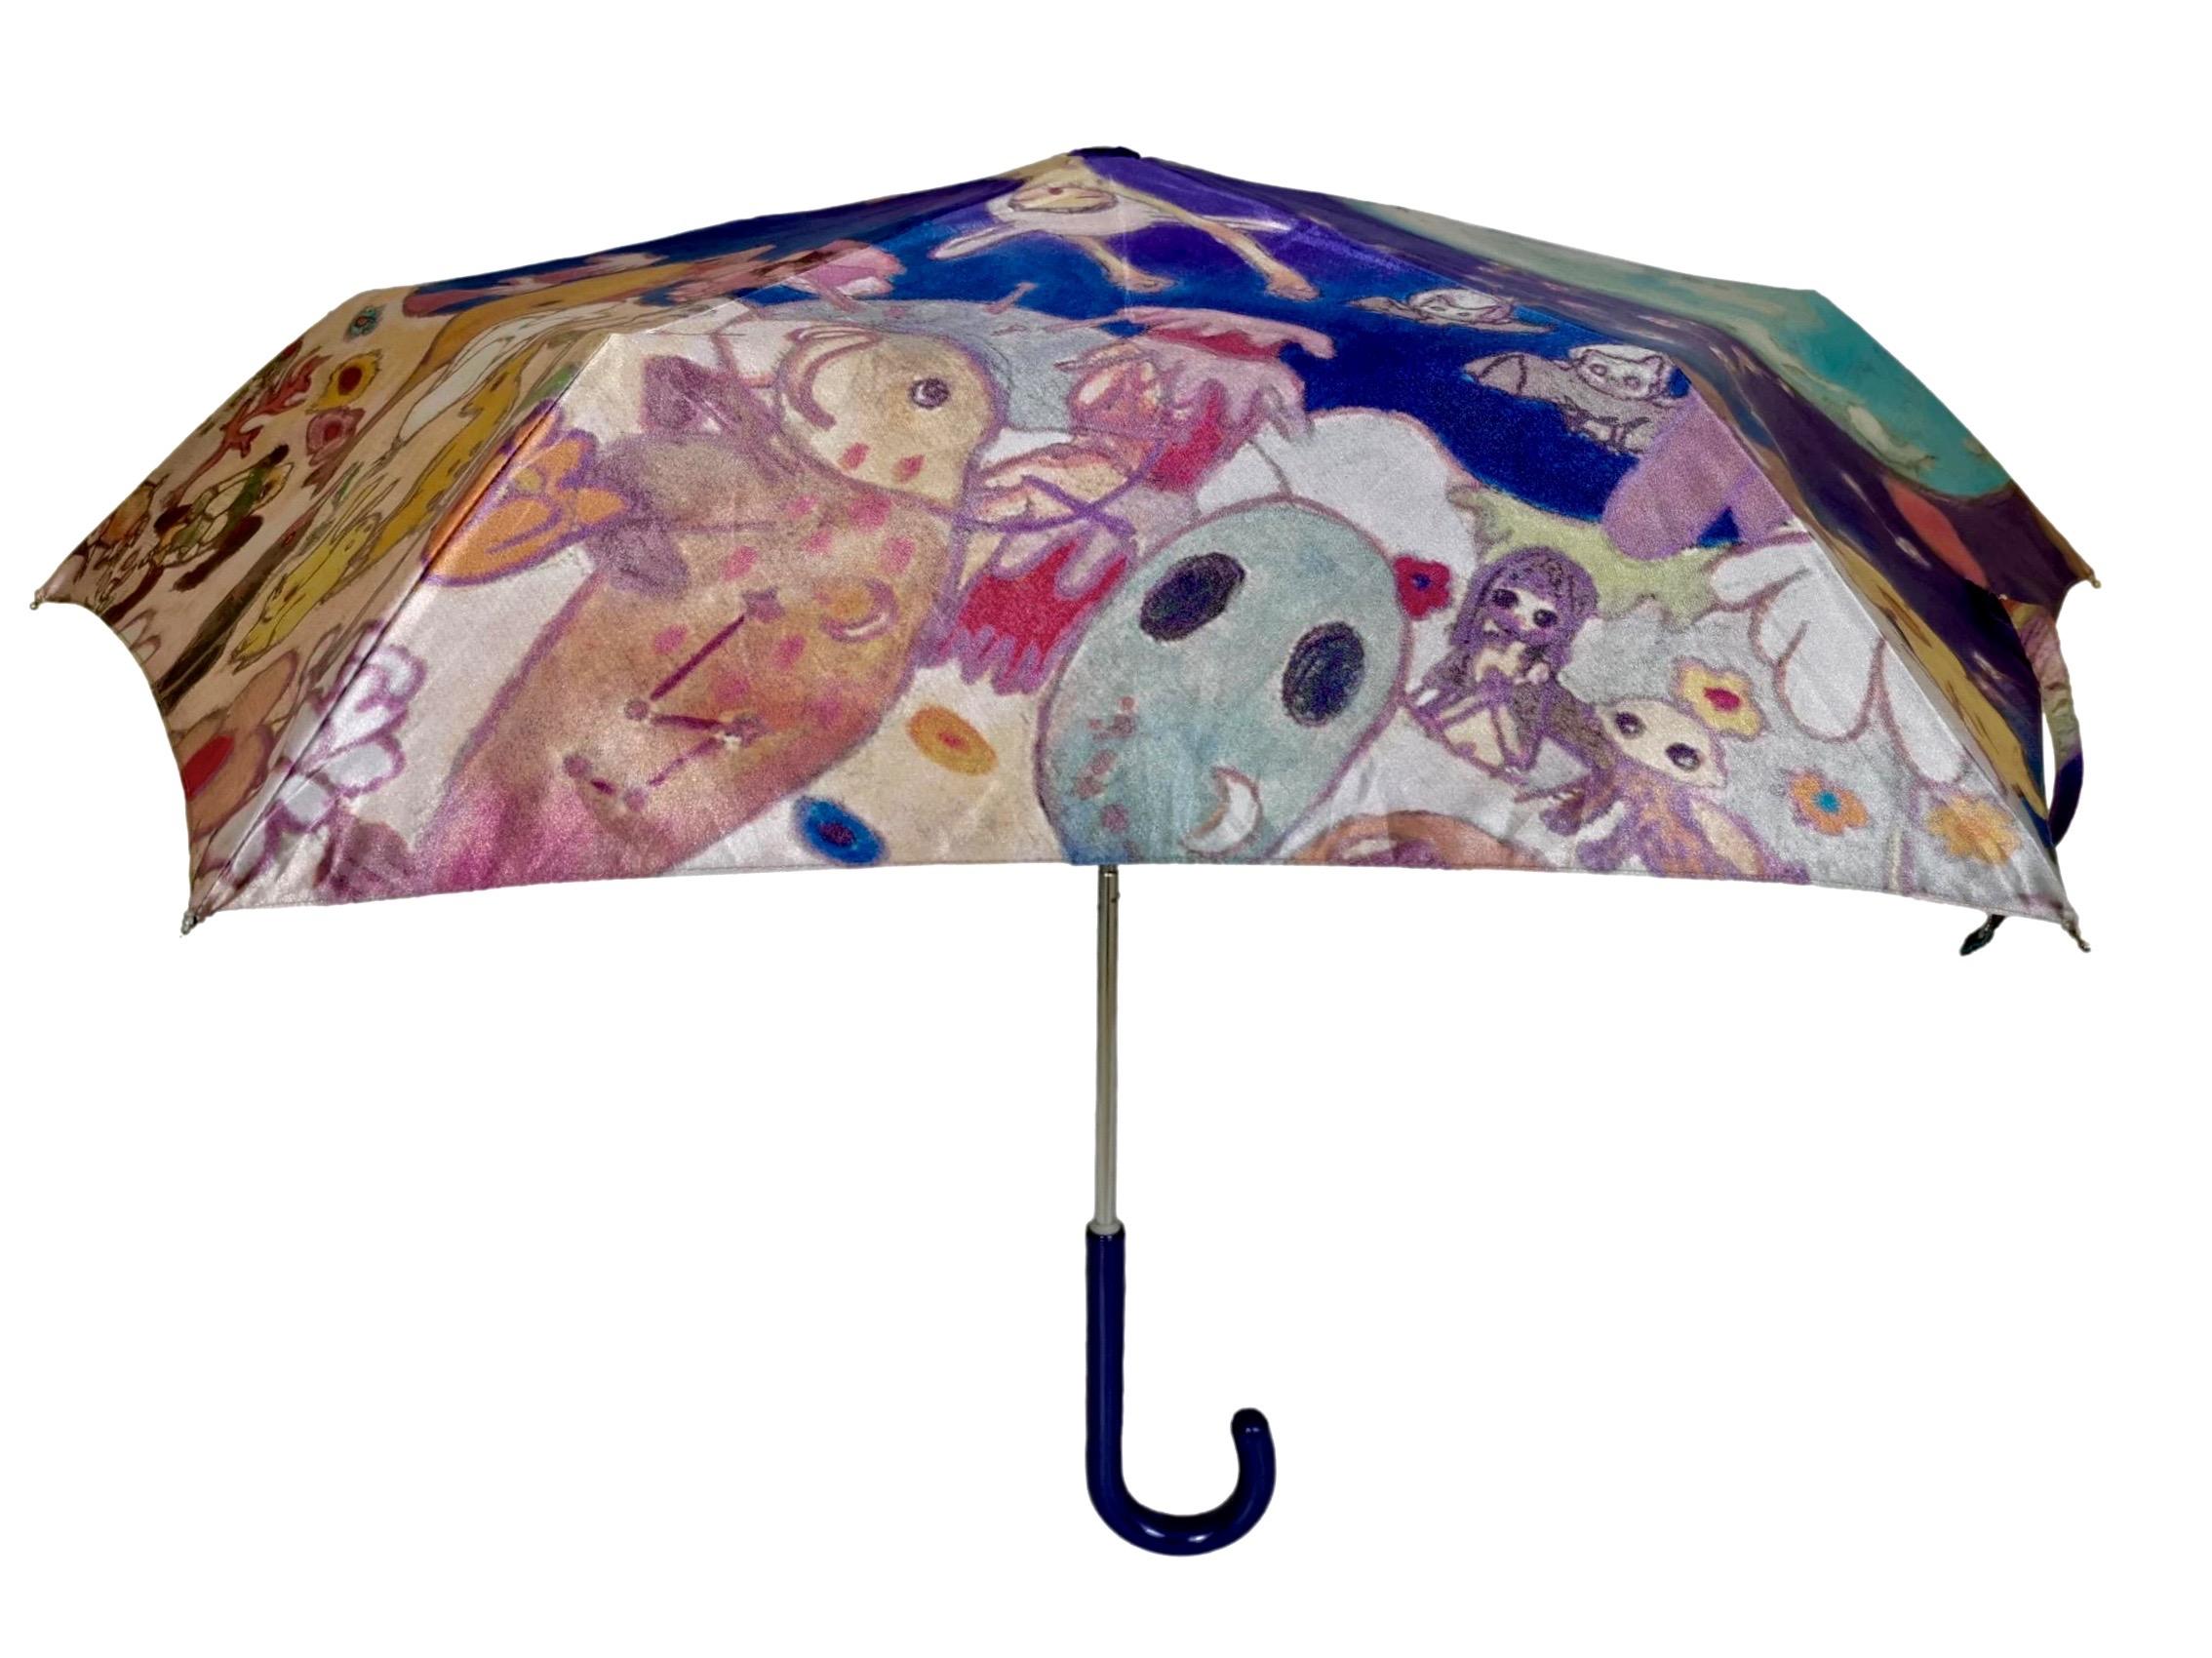 Gray Issey Miyake Aya Takano 2004 Limited Edition Umbrella  For Sale